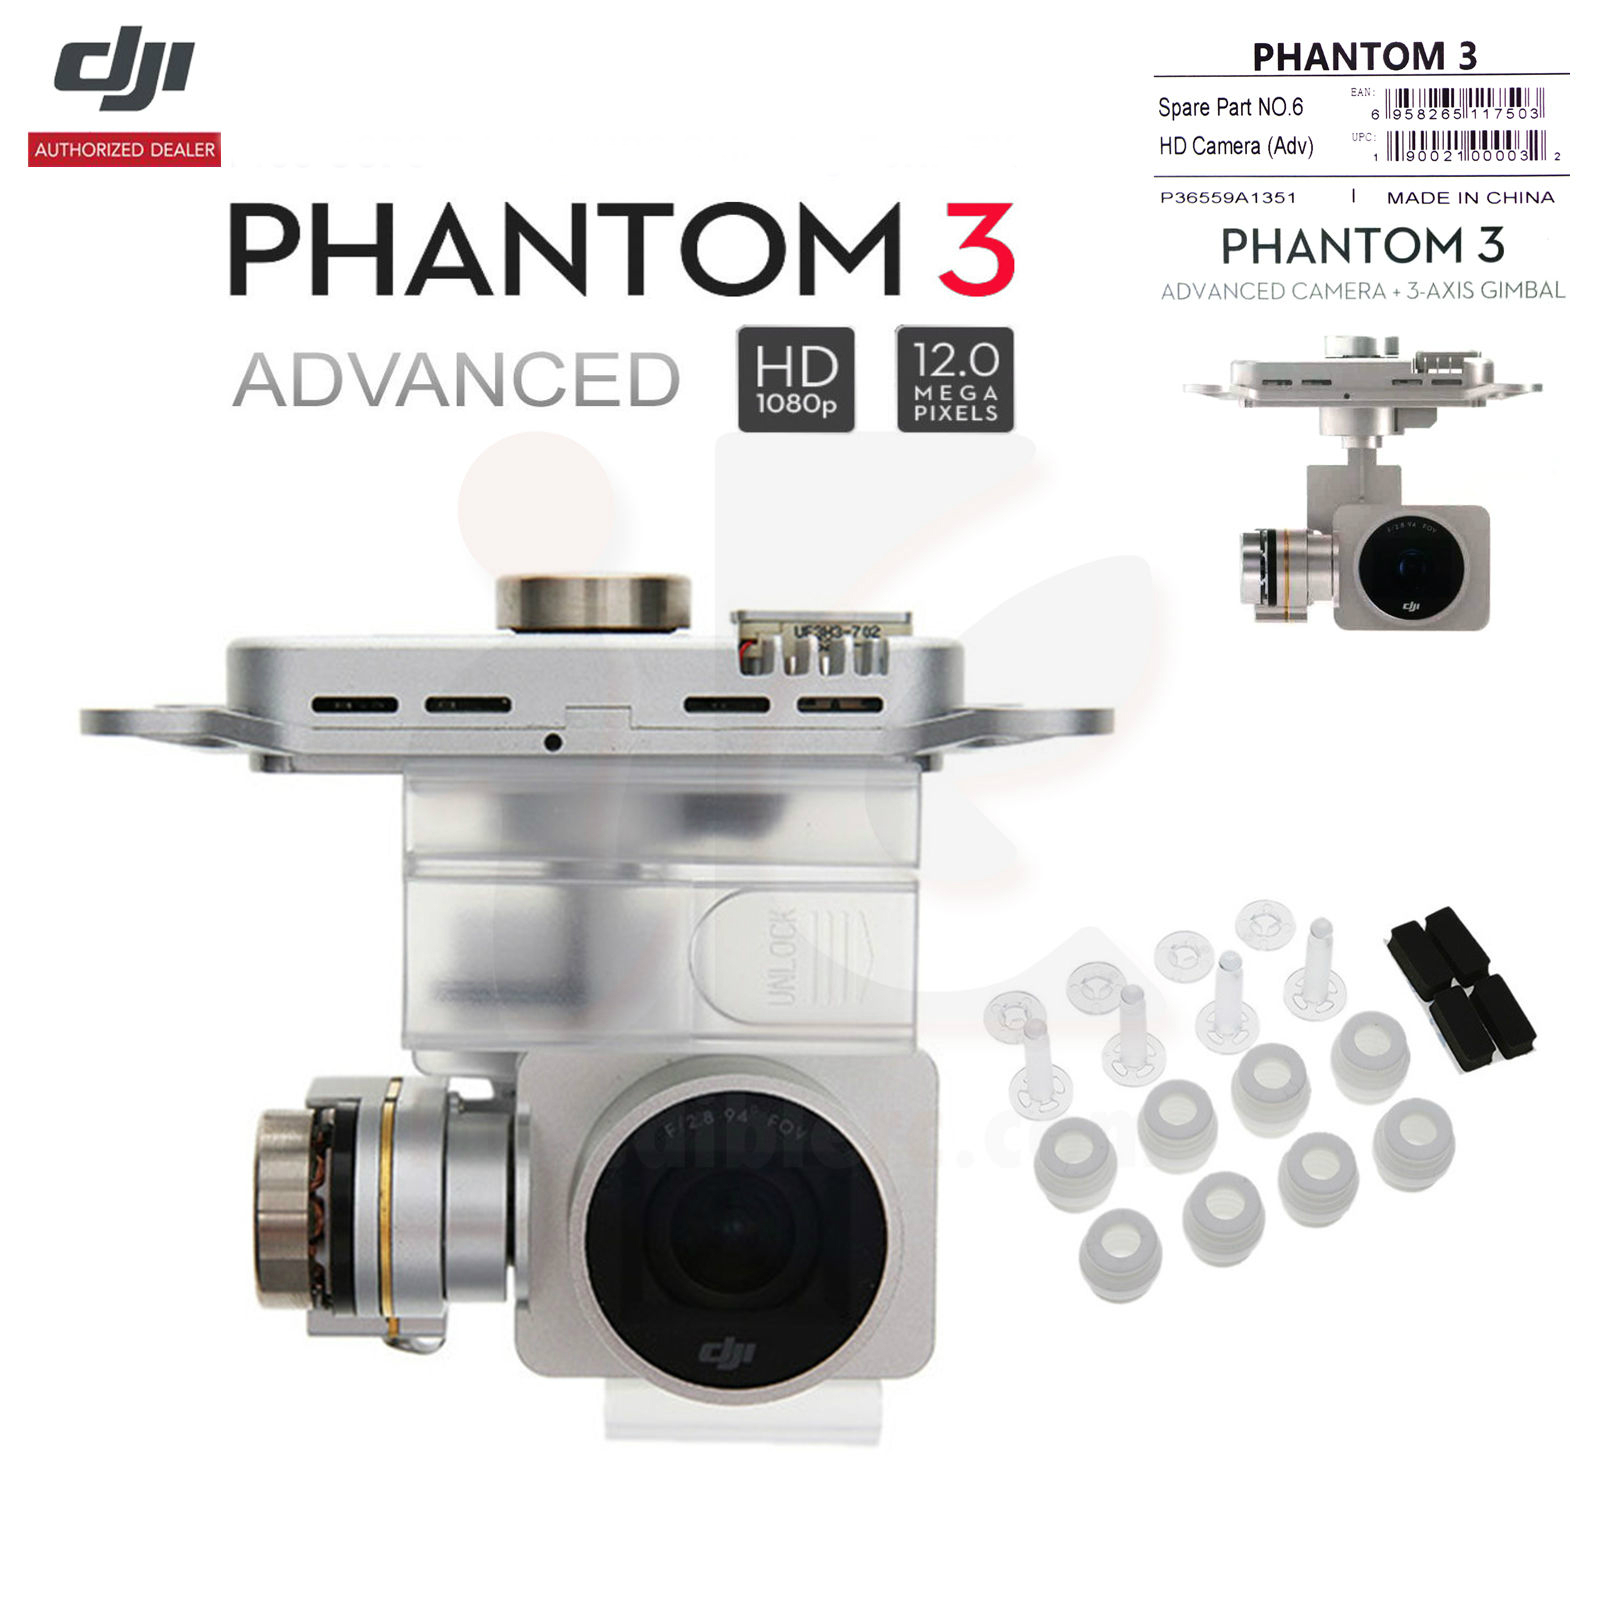 dji phantom 3 advanced camera